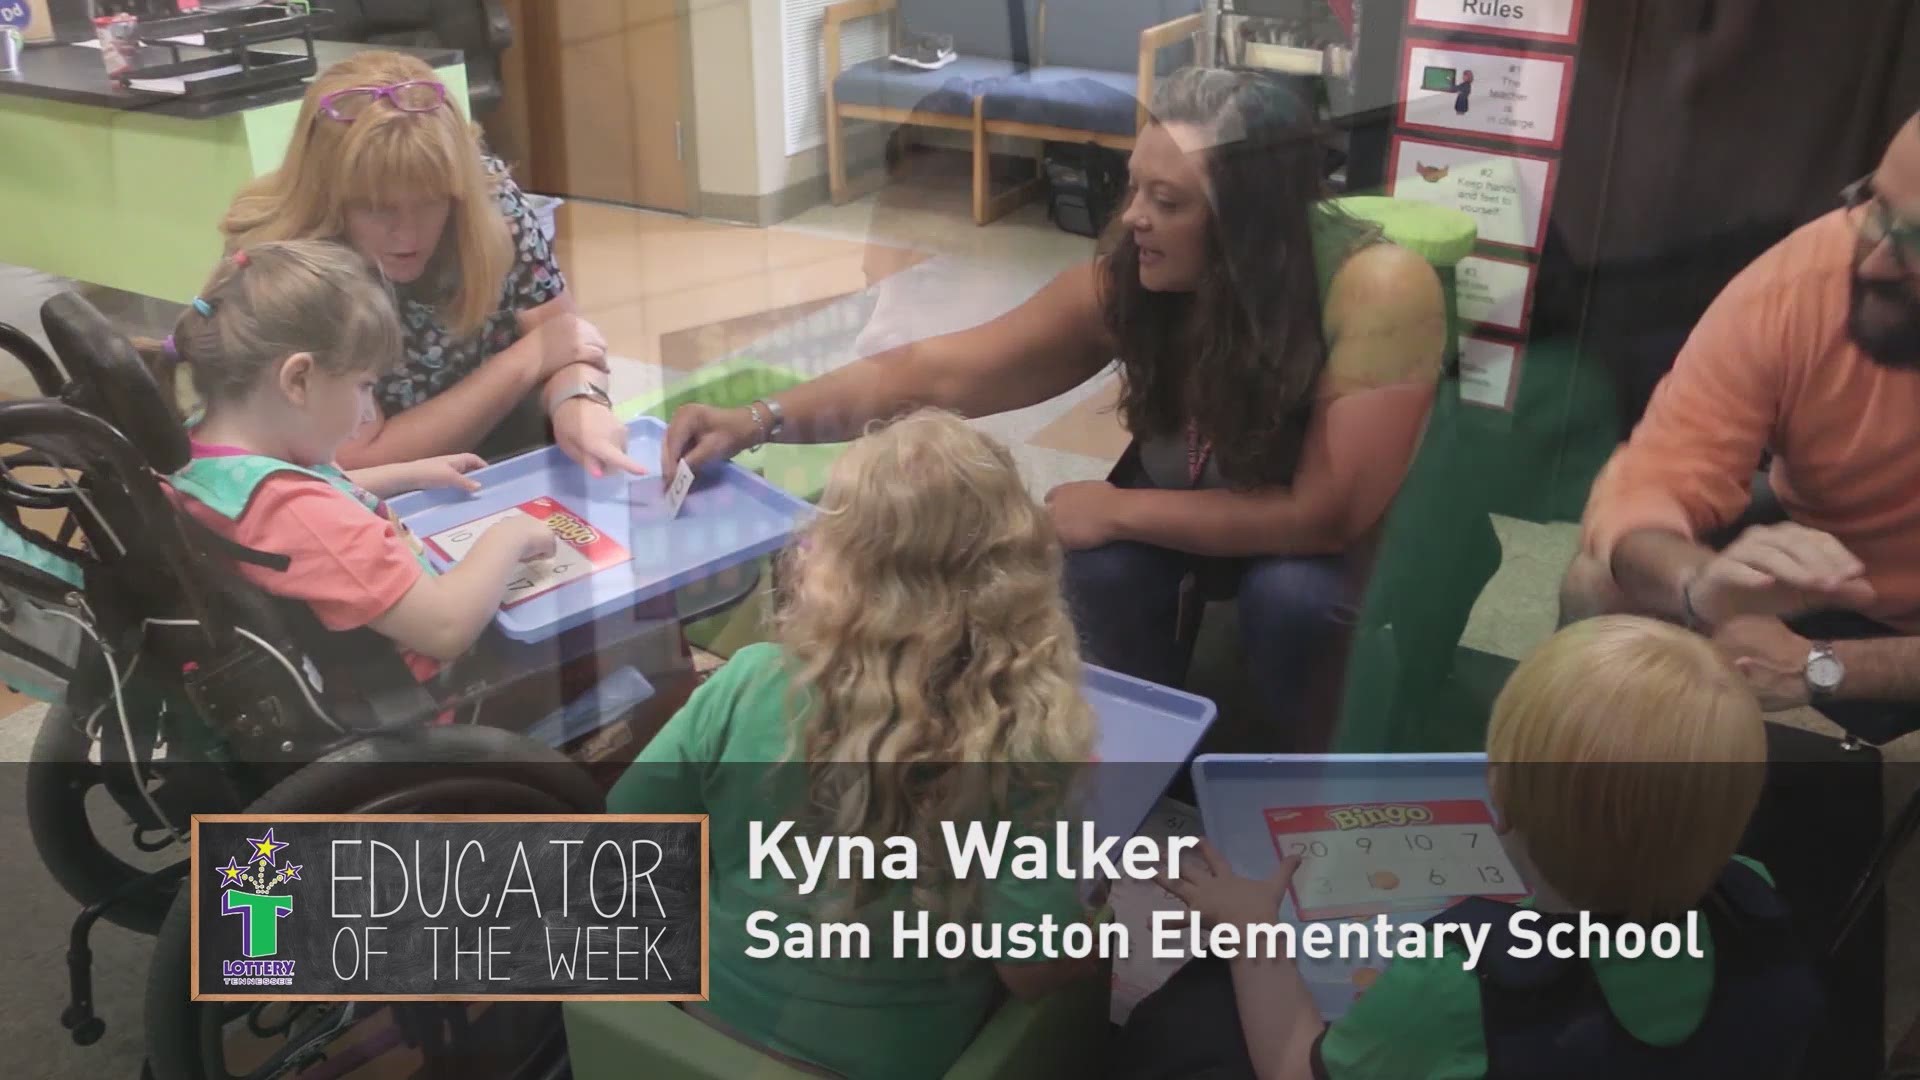 The educator of the week 8/14 is Kyna Walker.